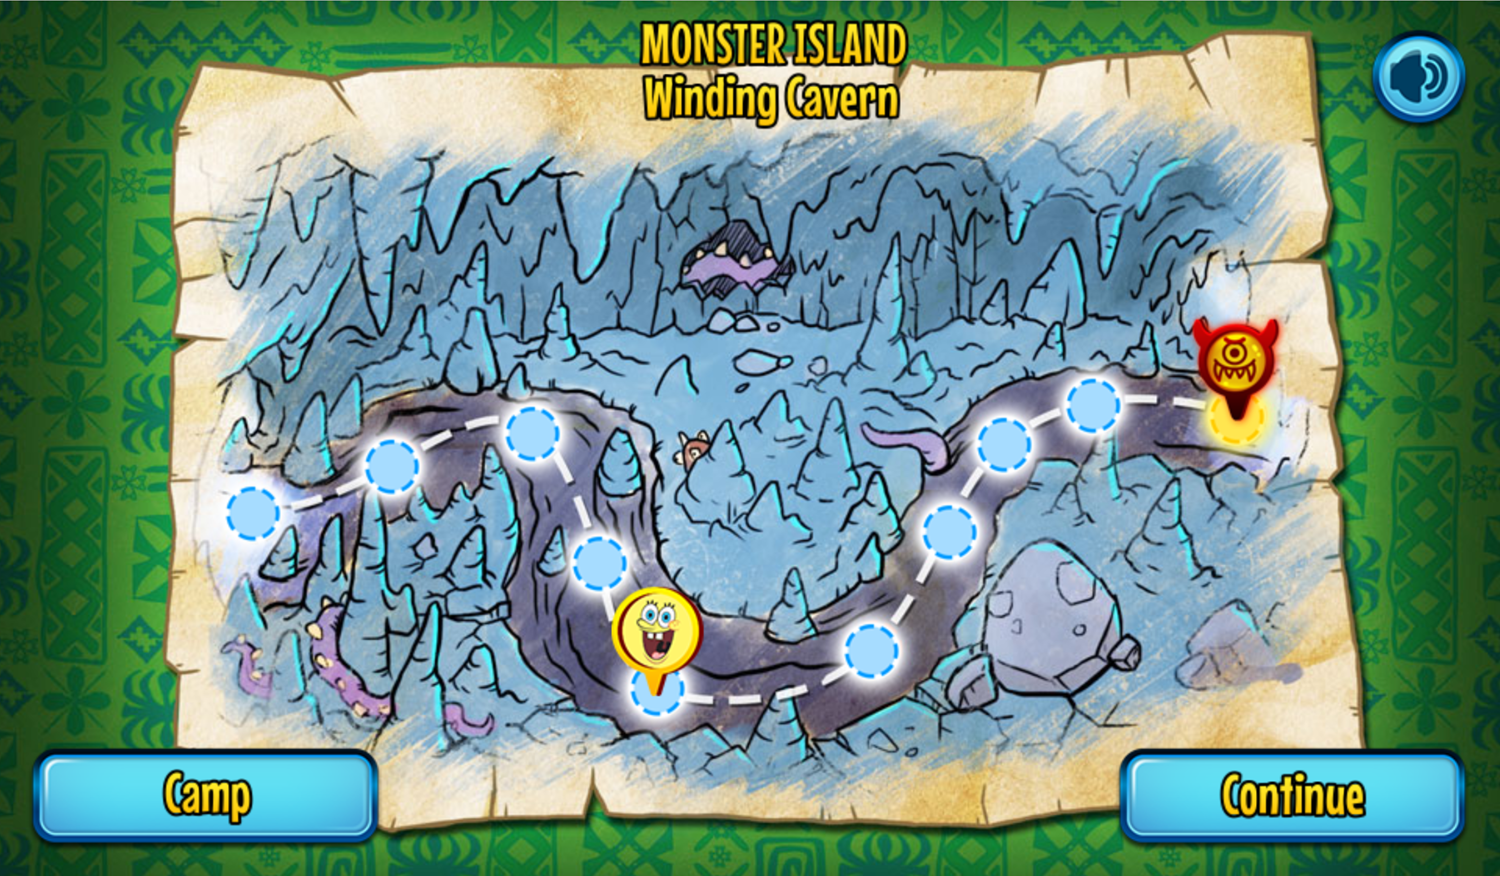 SpongeBob SquarePants Monster Island Adventure Game Winding Cavern Map Screen Screenshot.